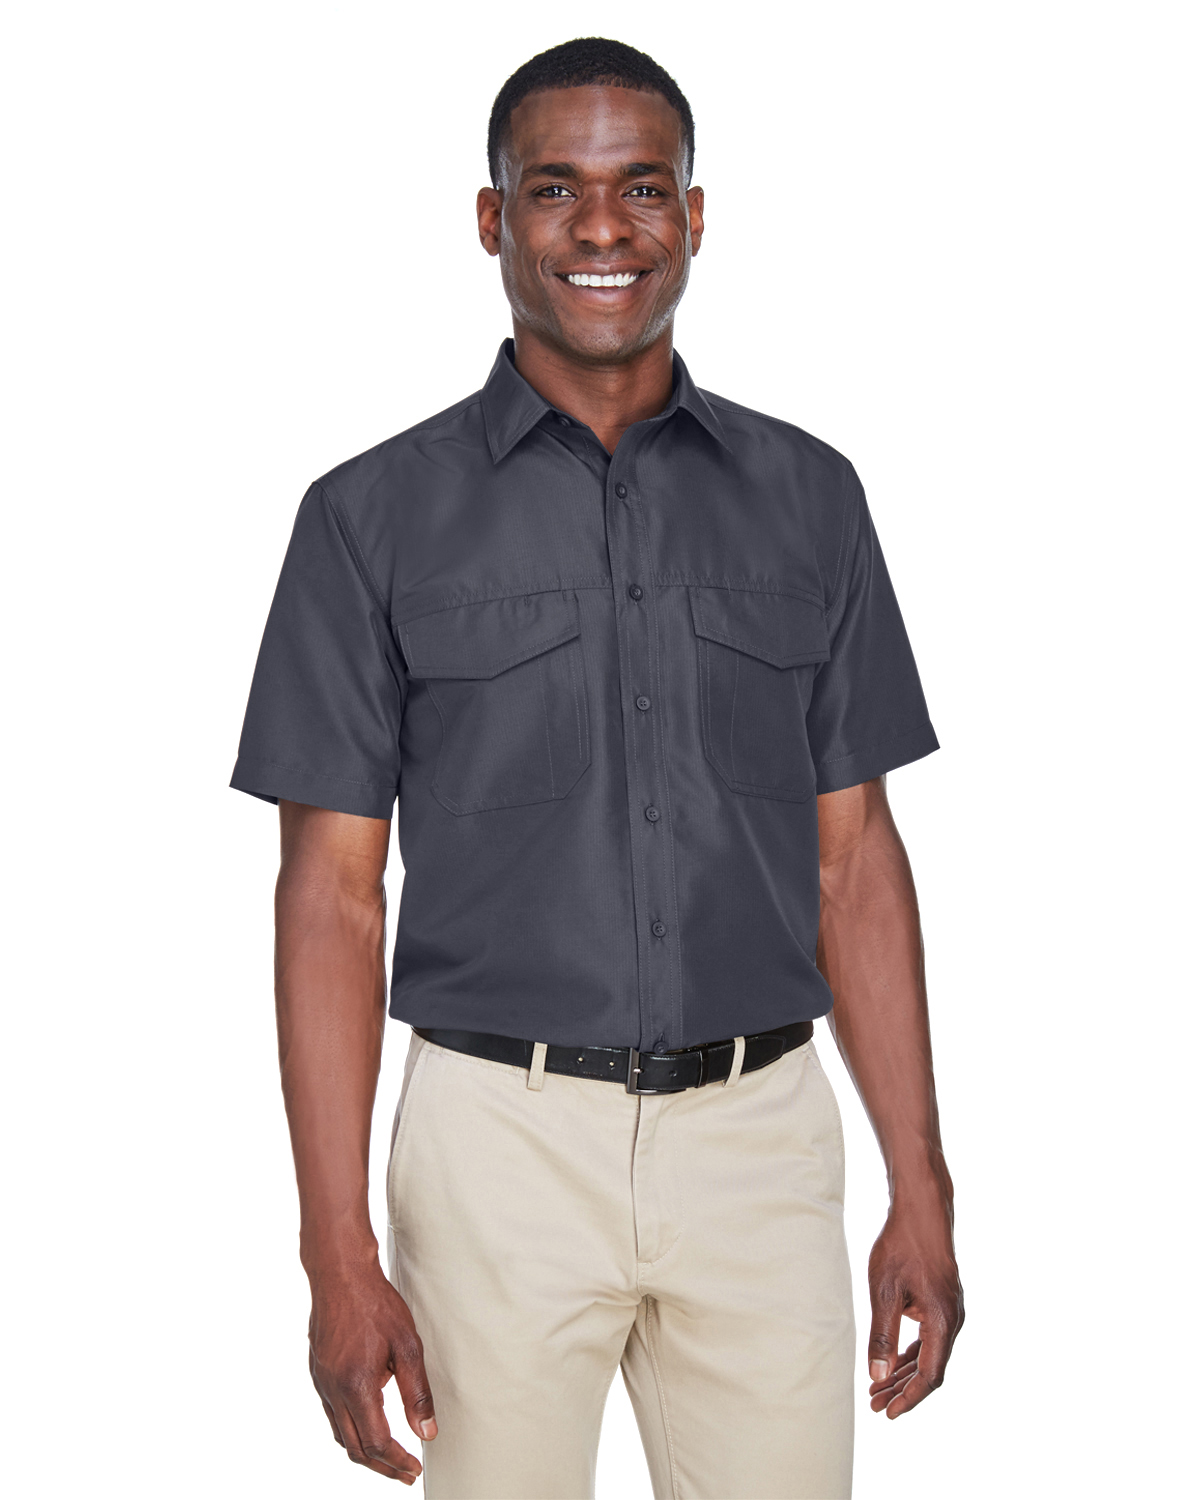 Men's Key West Short-Sleeve Performance Staff Shirt